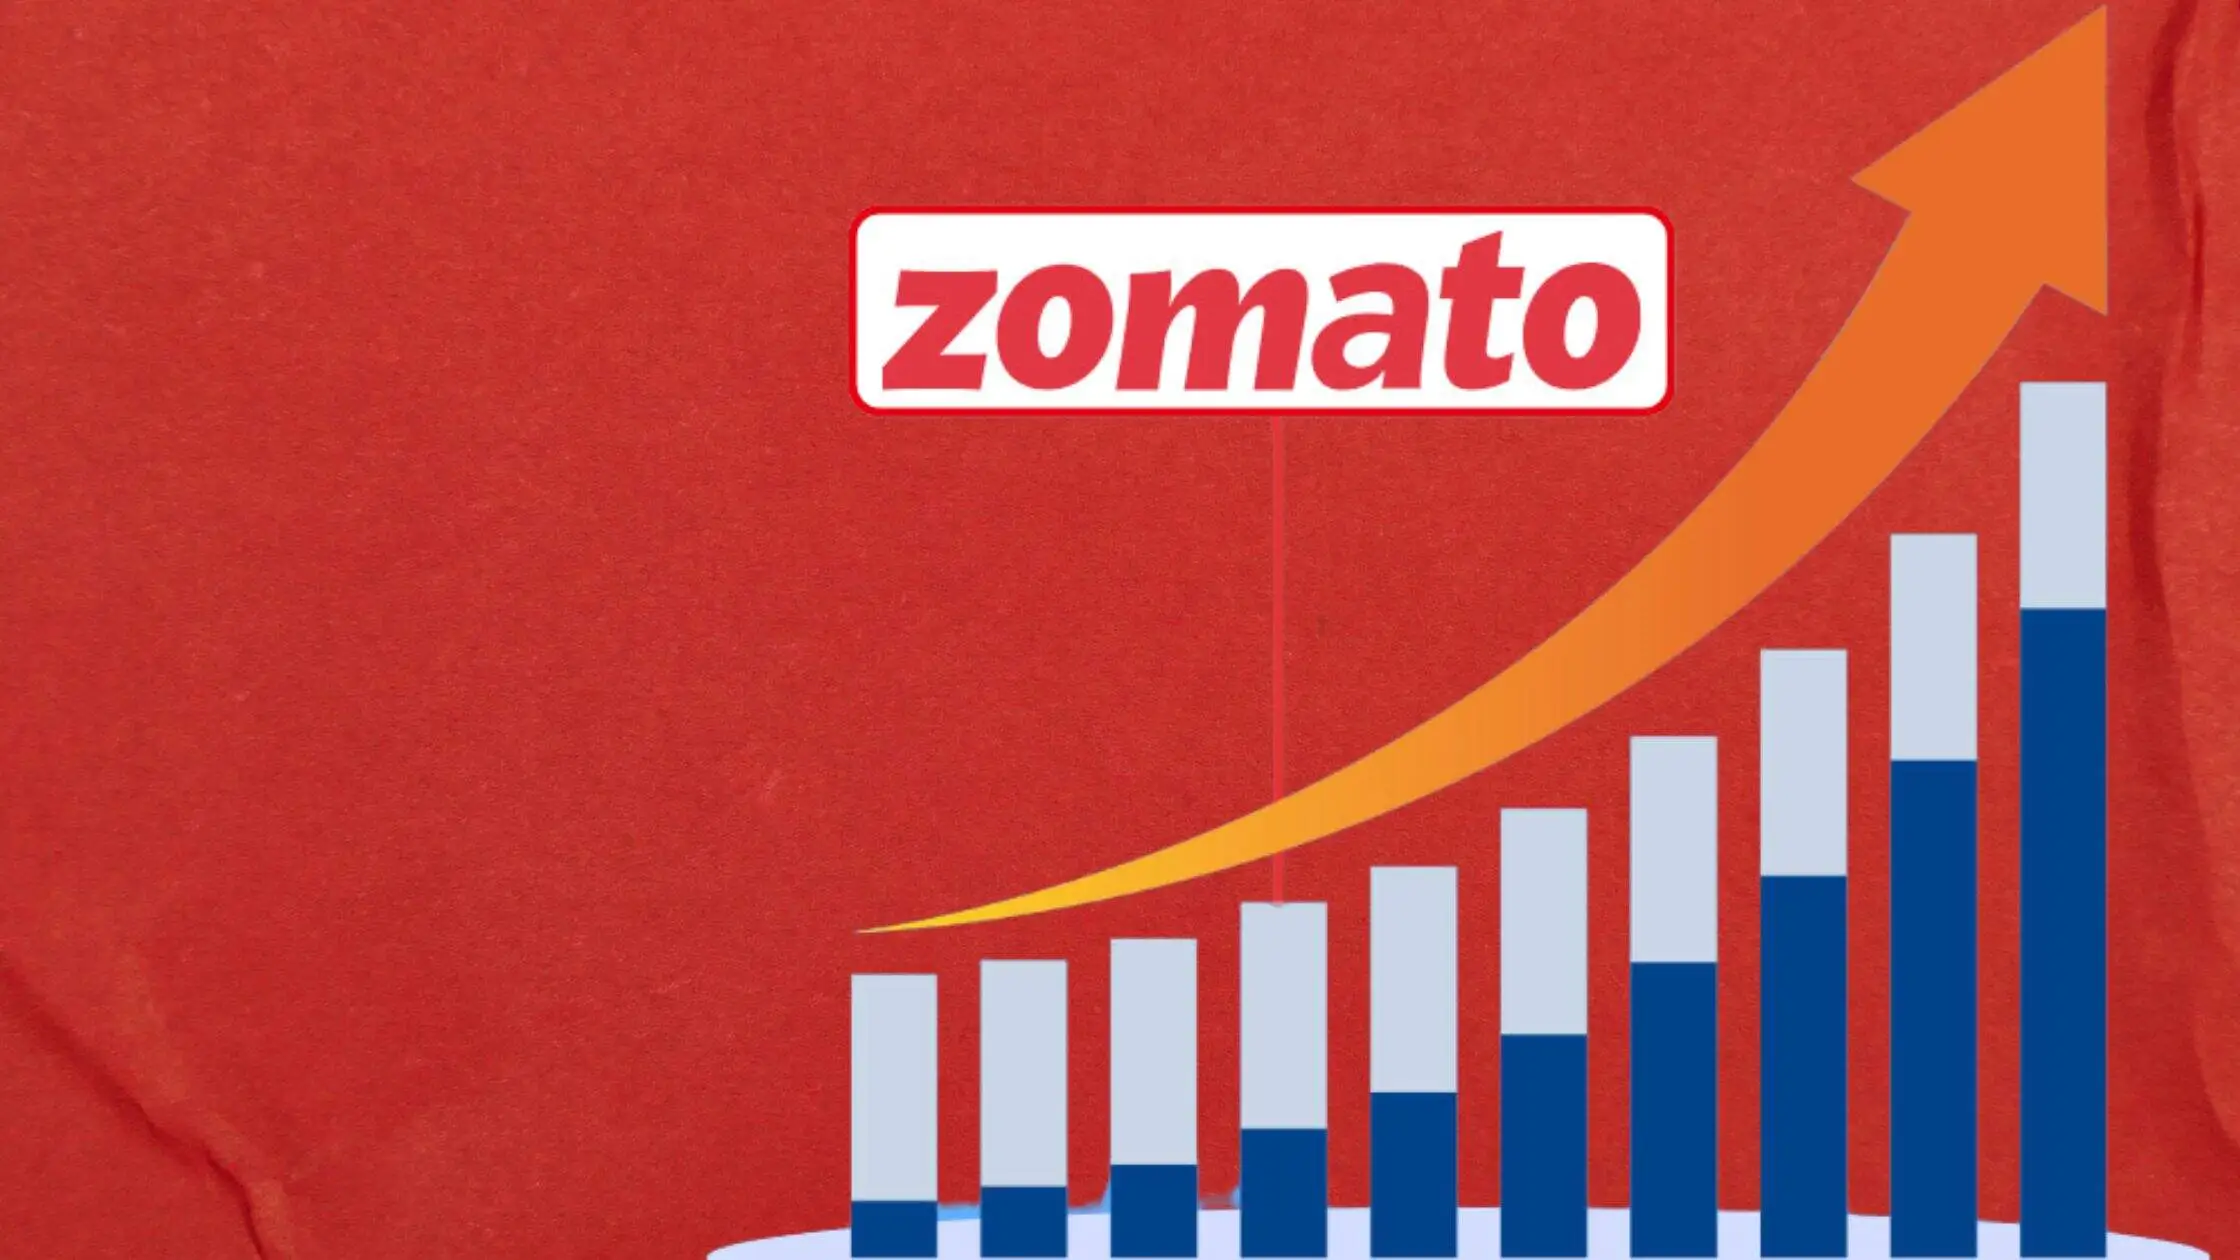 Zomato's Share Price